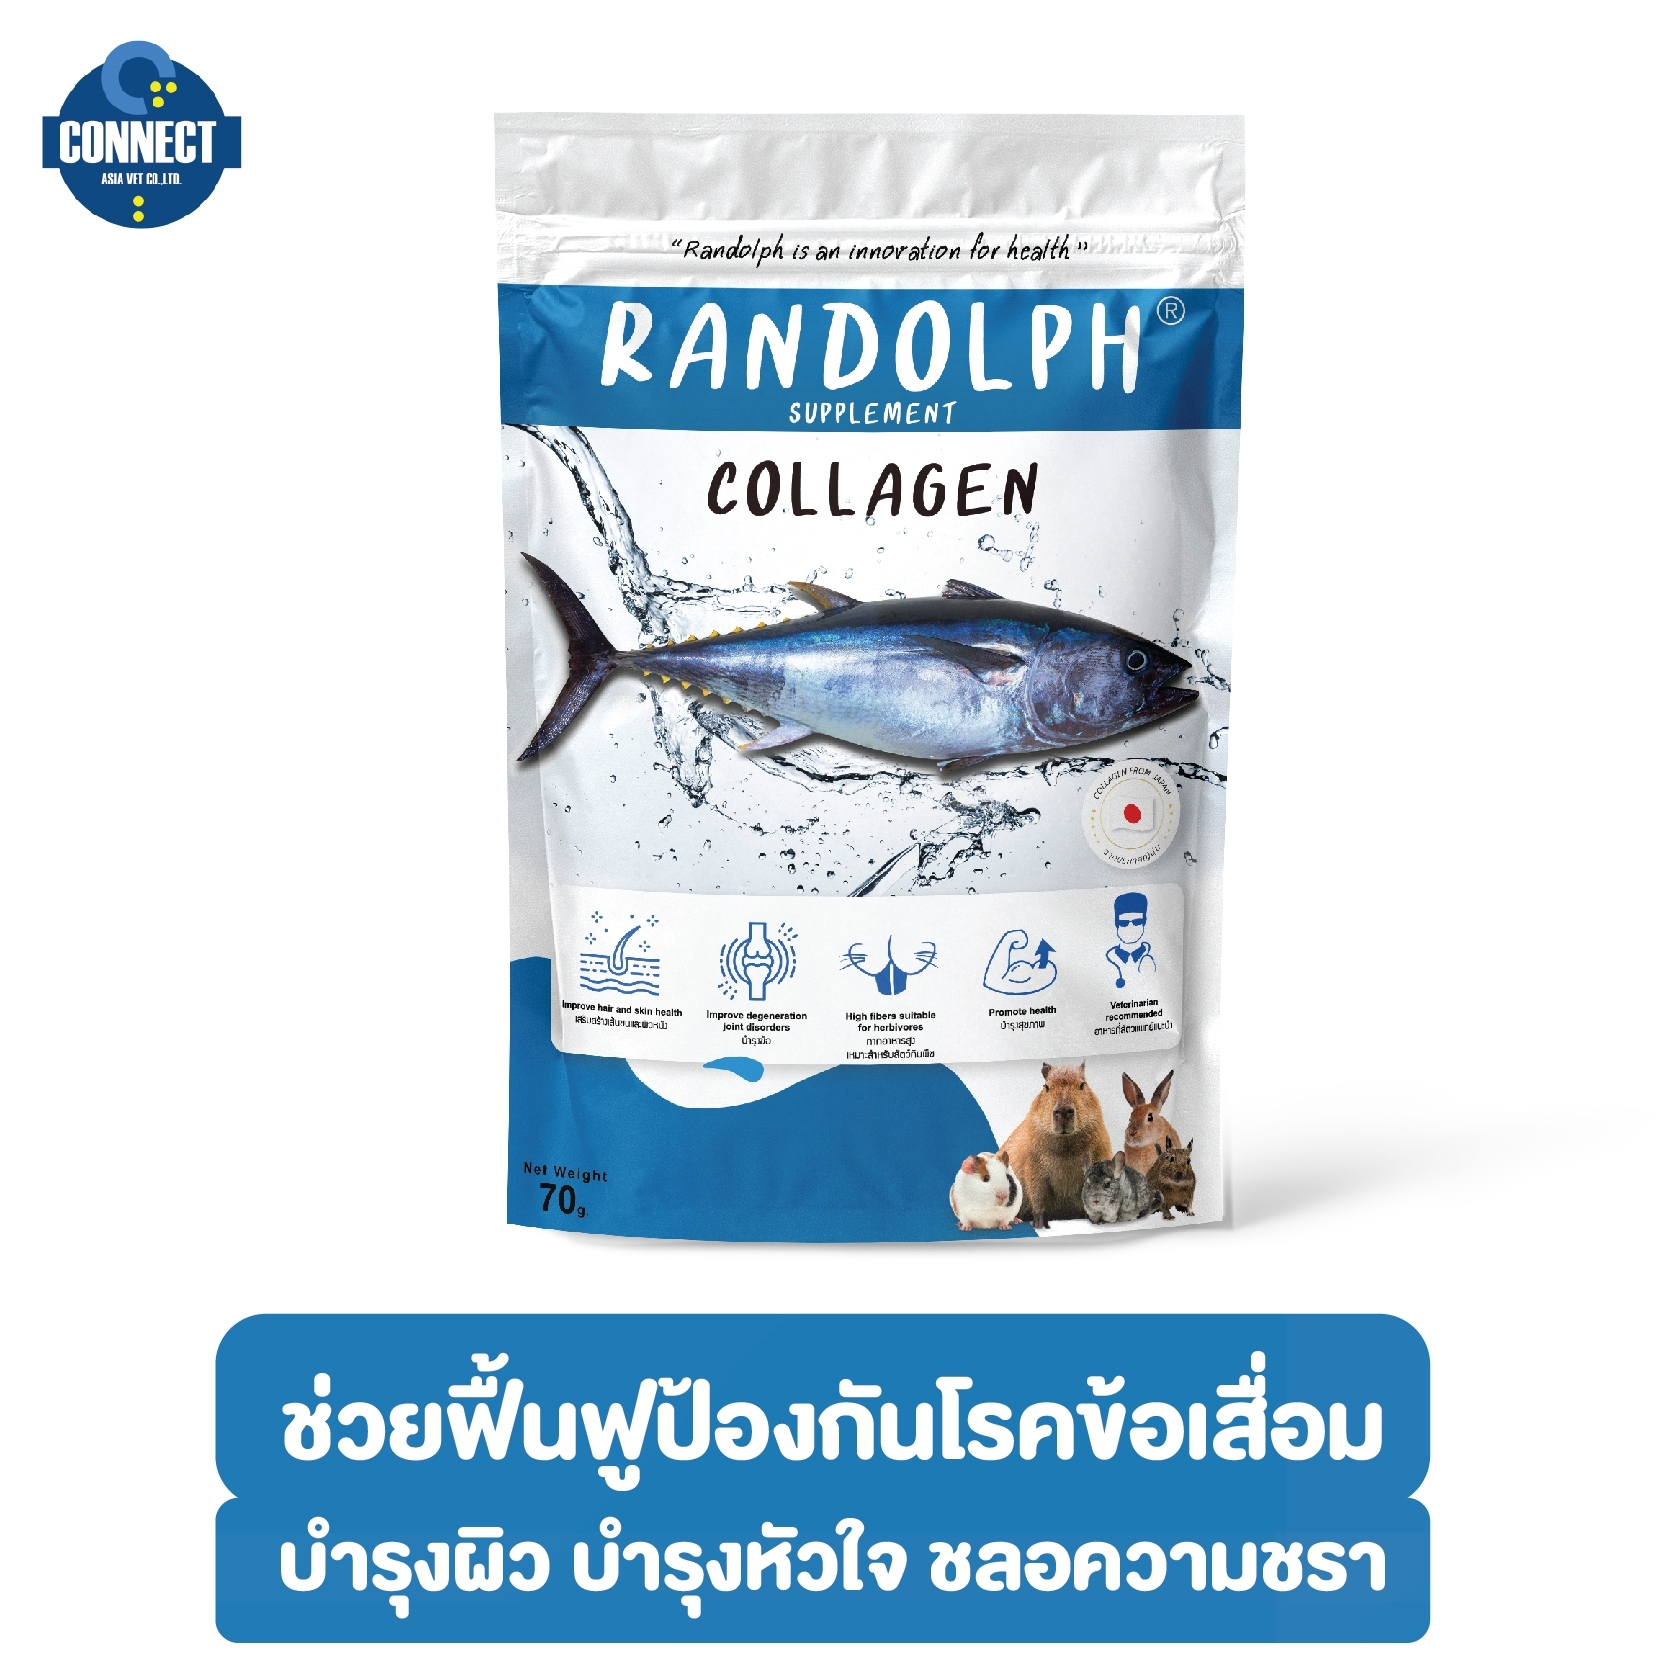 RANDOLPH - สแน็คบำรุงสุขภาพ สูตรคอลลาเจน ขนาด 70 กรัม.